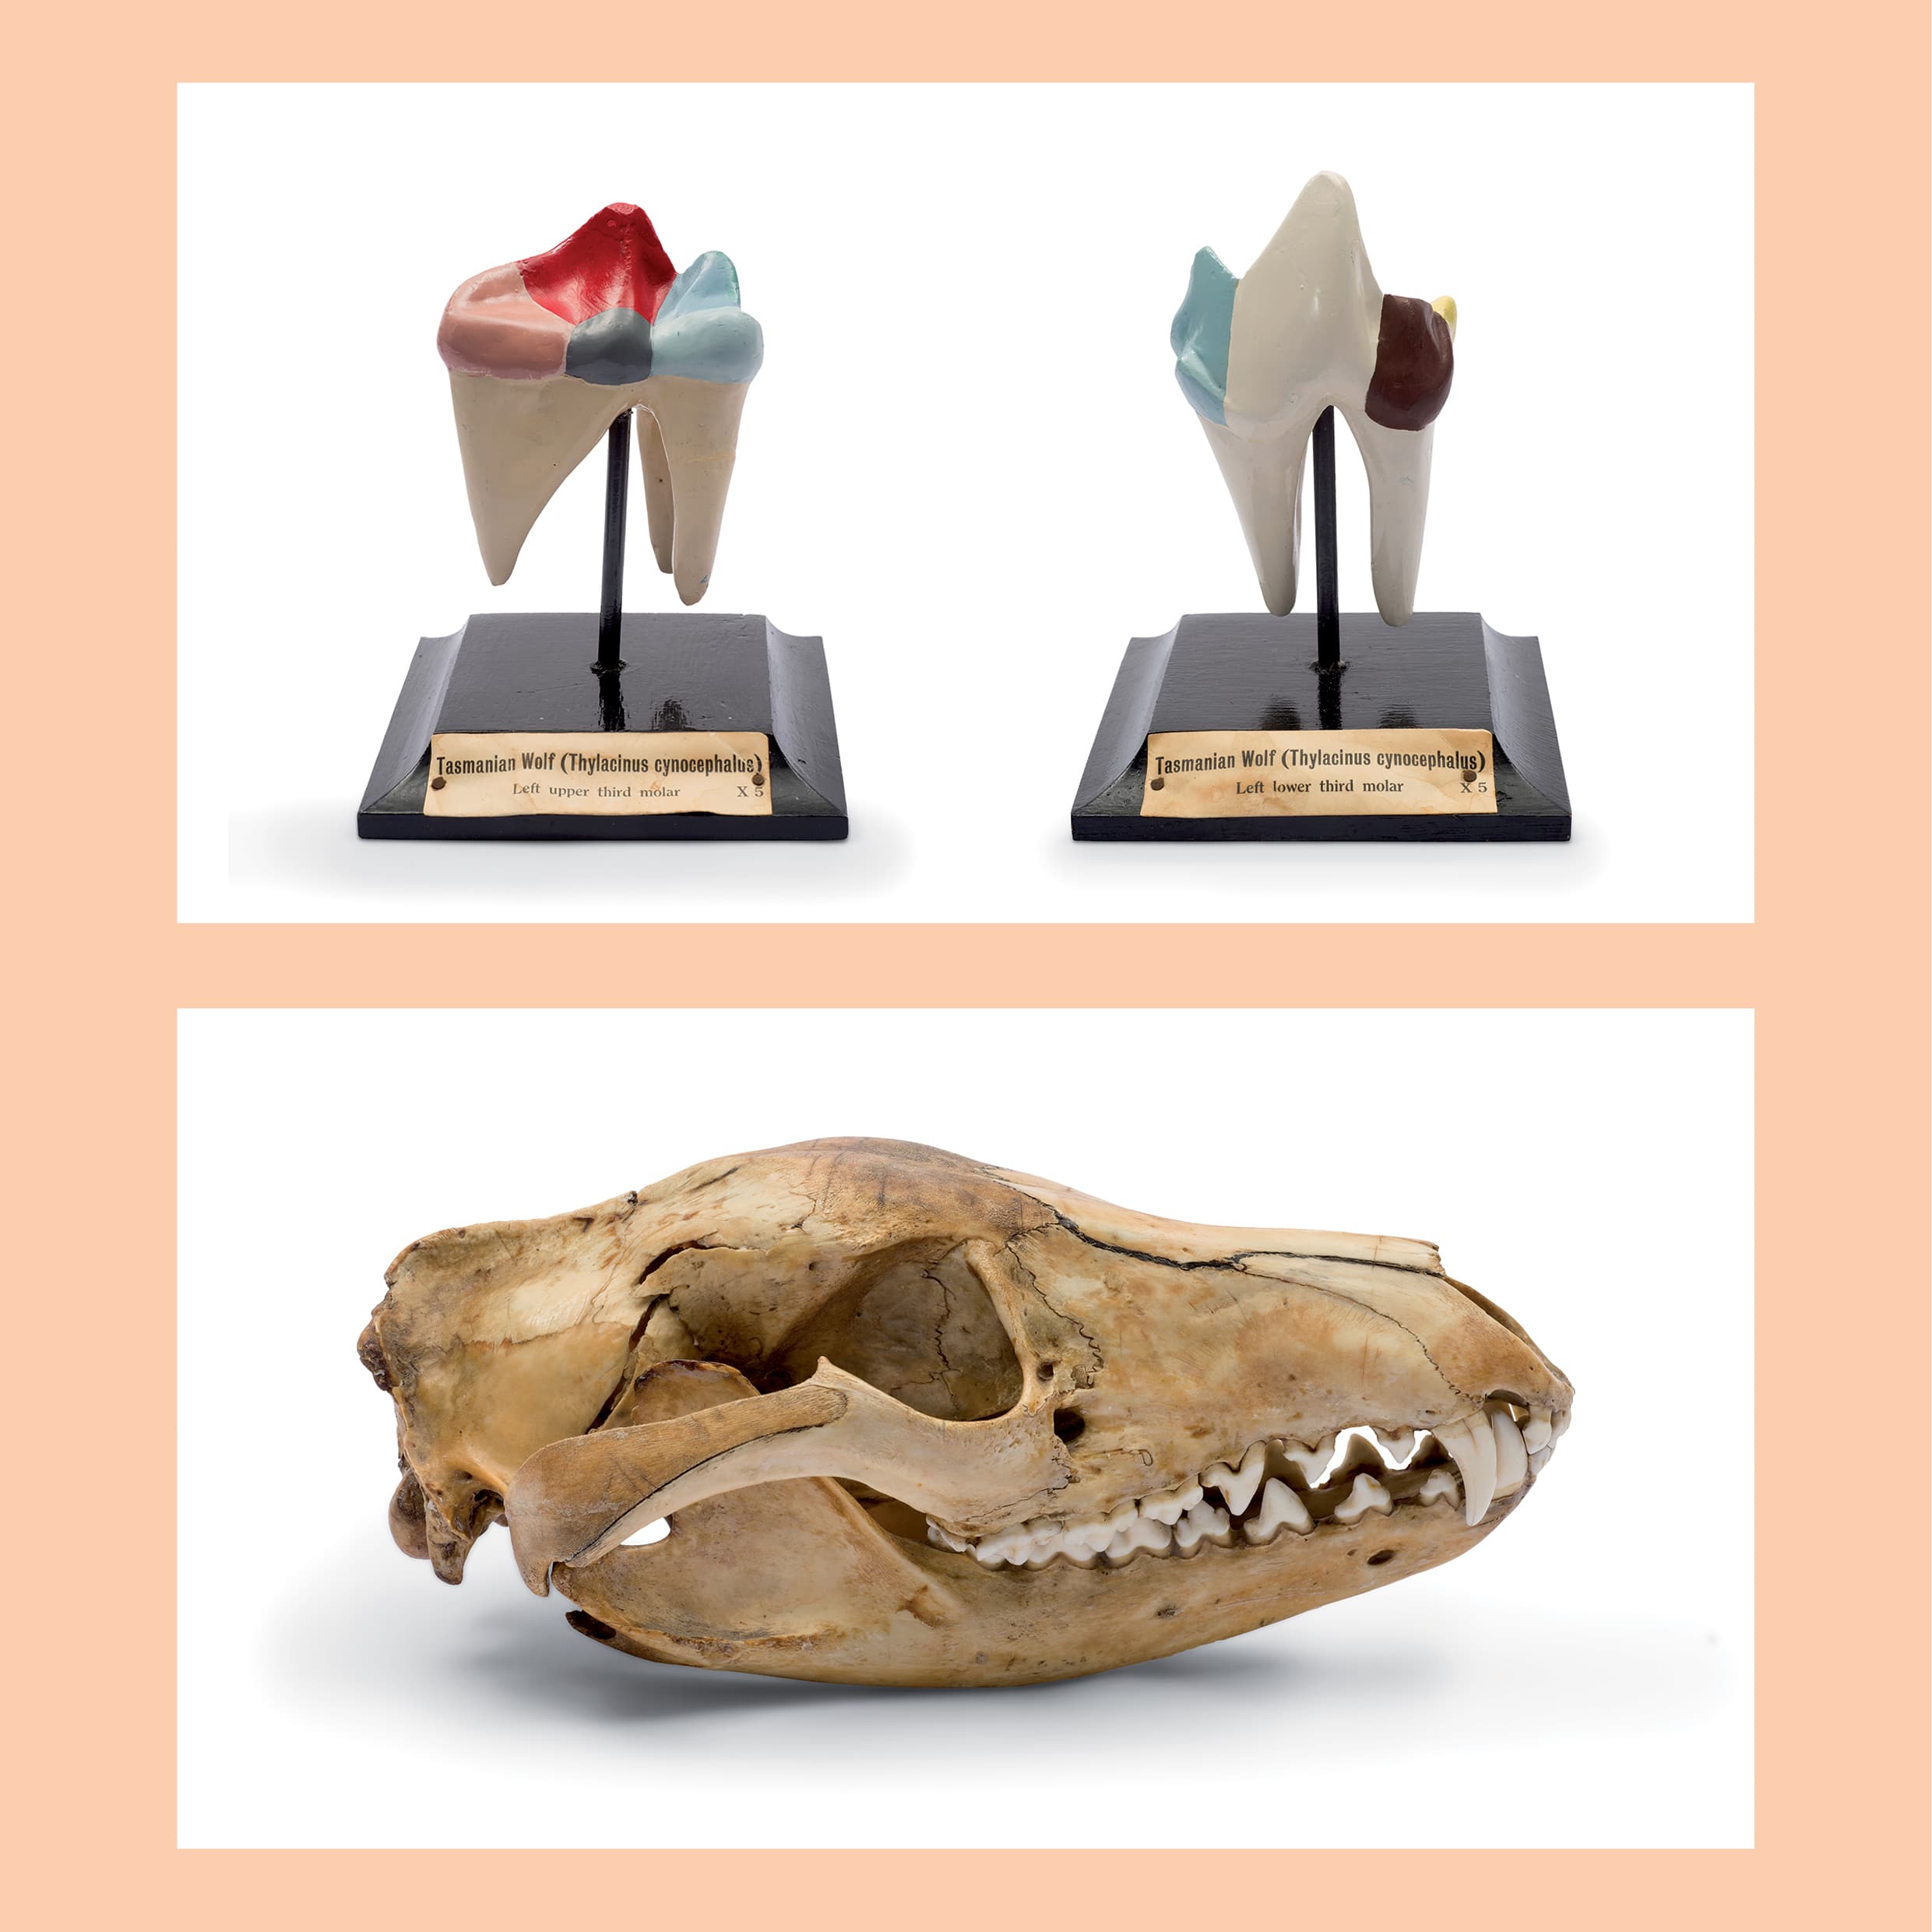  <strong>Charles Harold Down (1890–1965), Teaching models: Tasmanian Wolf (Thylacinus cynocephalus)</strong> / Left upper third molar / X5 and Tasmanian Wolf (Thylacinus cynocephalus) / Left lower third molar / X5, c. 1920–40, gypsum, enamel paint, wood; each model 15.0 × 12.5 × 12.5 cm. HFADM 2879 and
  HFADM 2880, Henry Forman Atkinson Dental Museum, University of Melbourne. <br><br> <strong>Thylacine skull</strong>, c. 1920, bone, 10.0 × 12.0 × 19.0 cm. HFADM 3795, Henry Forman Atkinson Dental Museum, University of Melbourne.